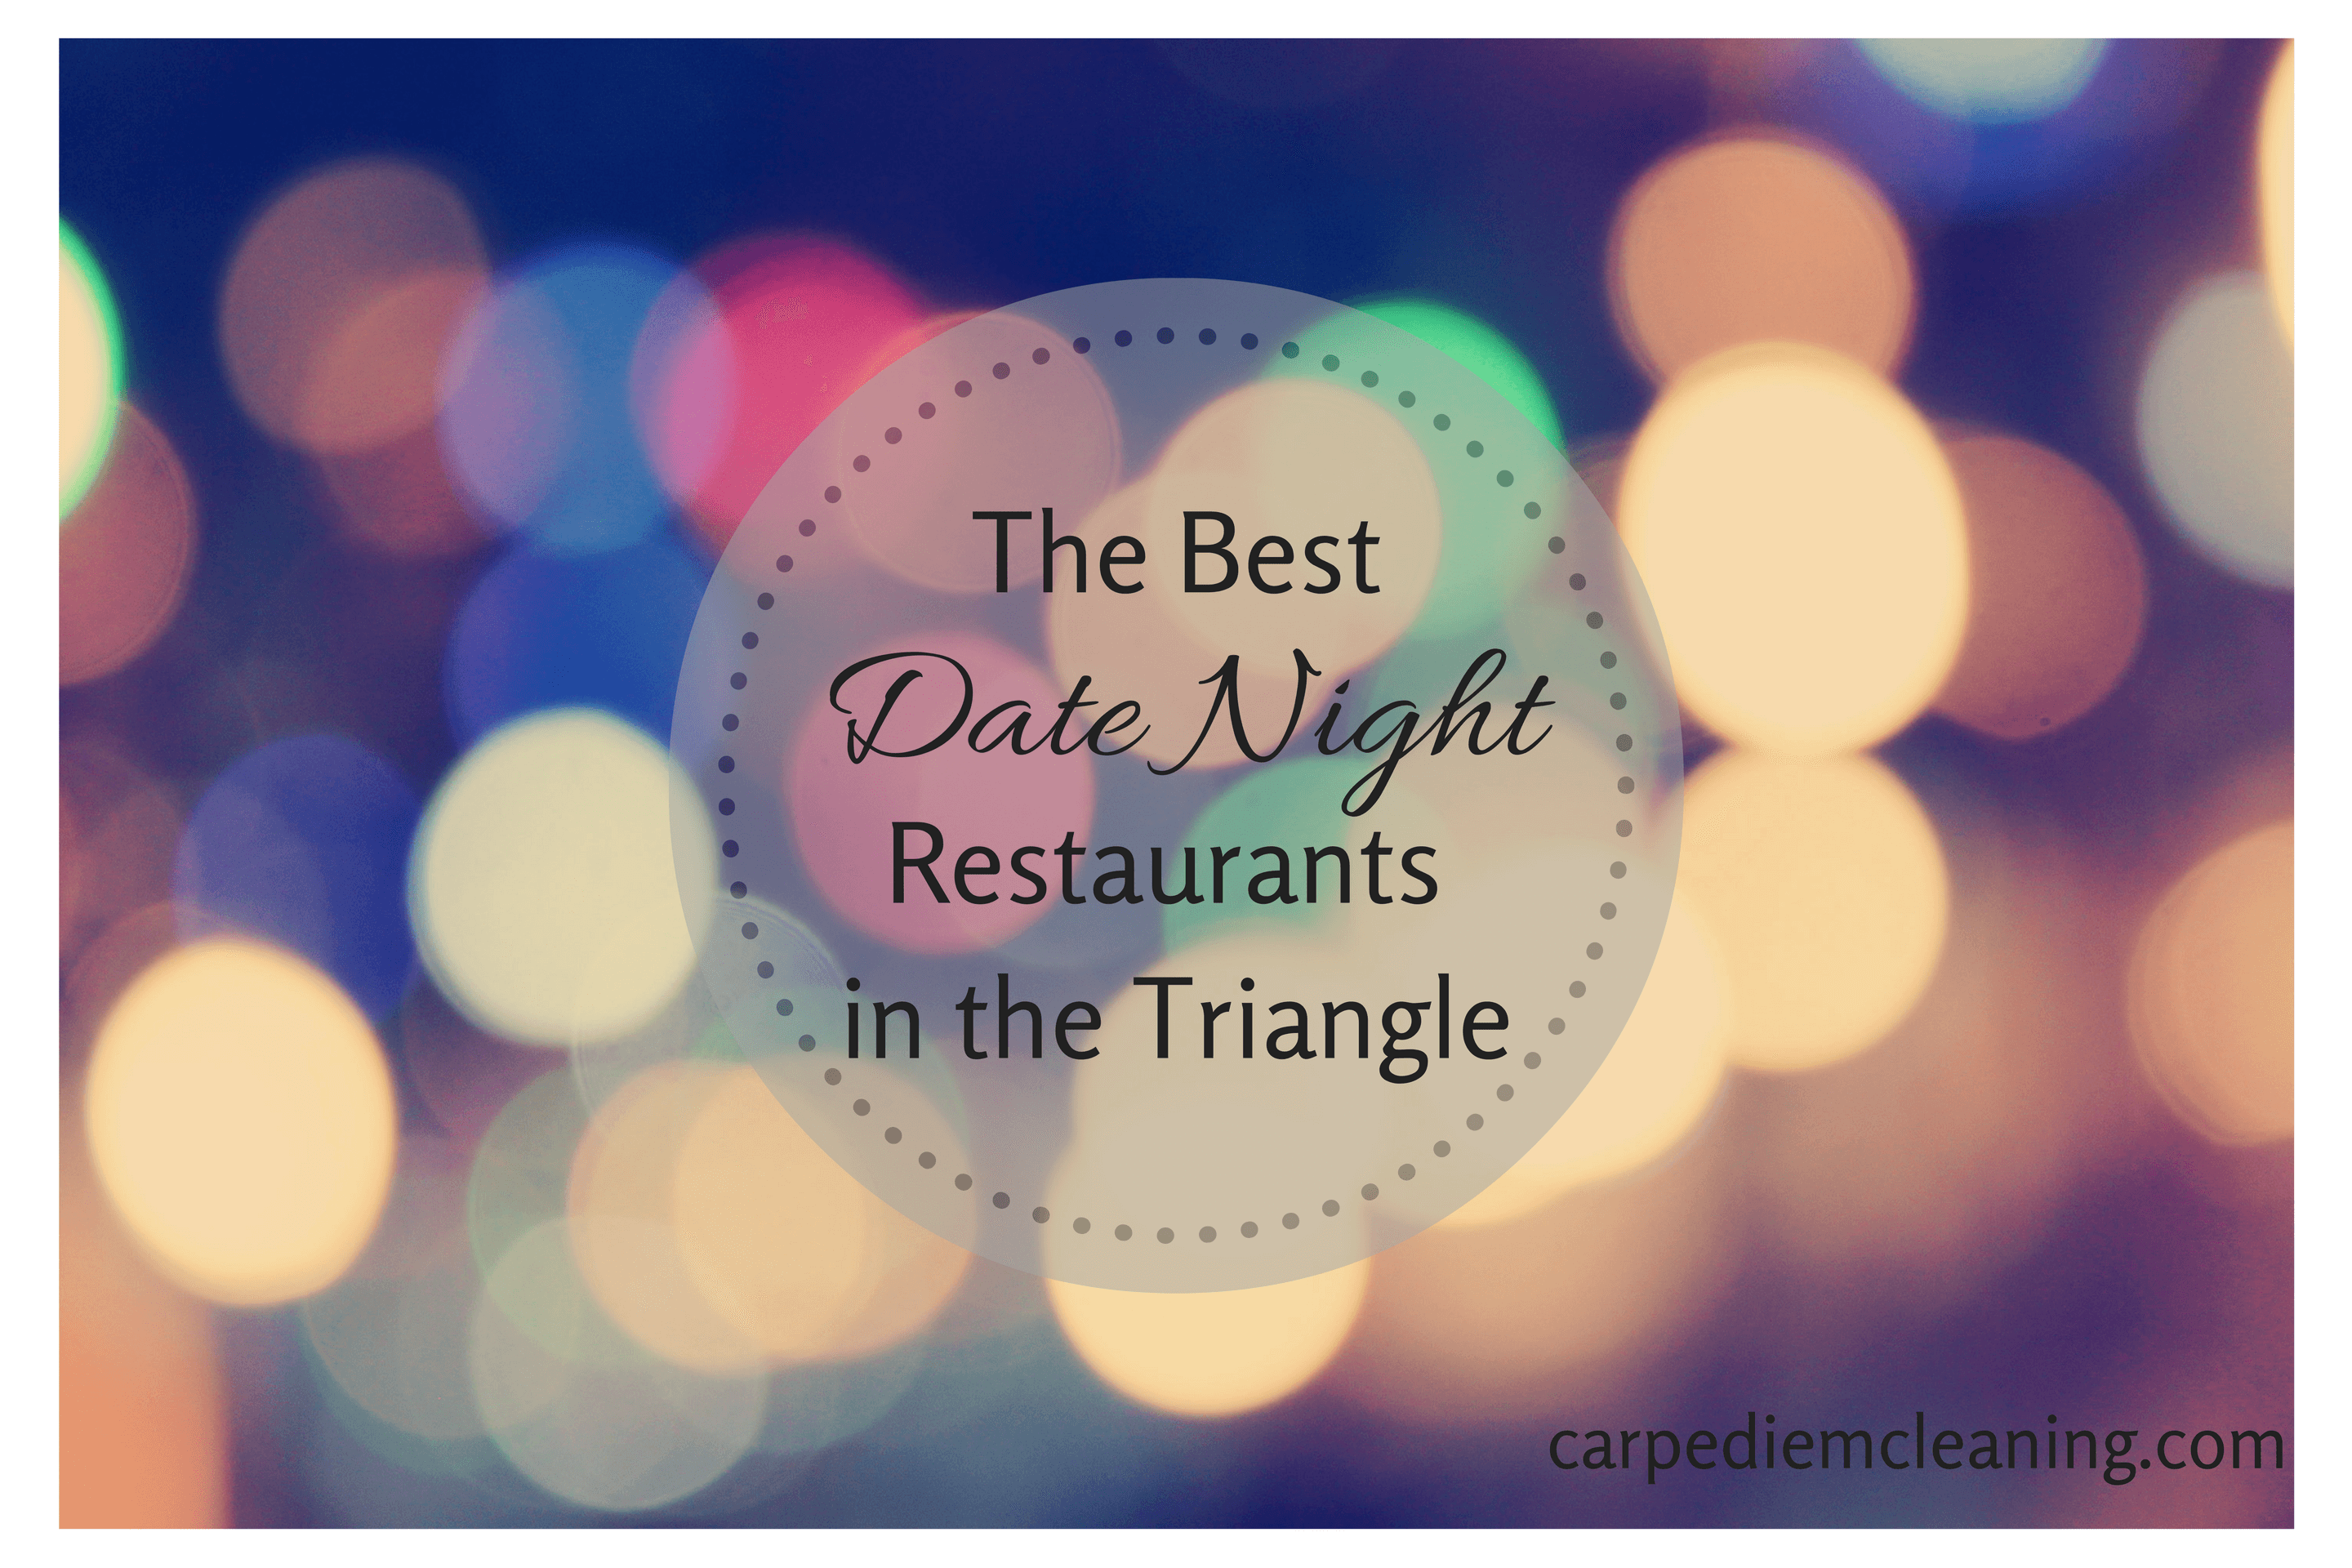 The Best Date Night Restaurants in the Triangle - Carpe Diem Cleaning